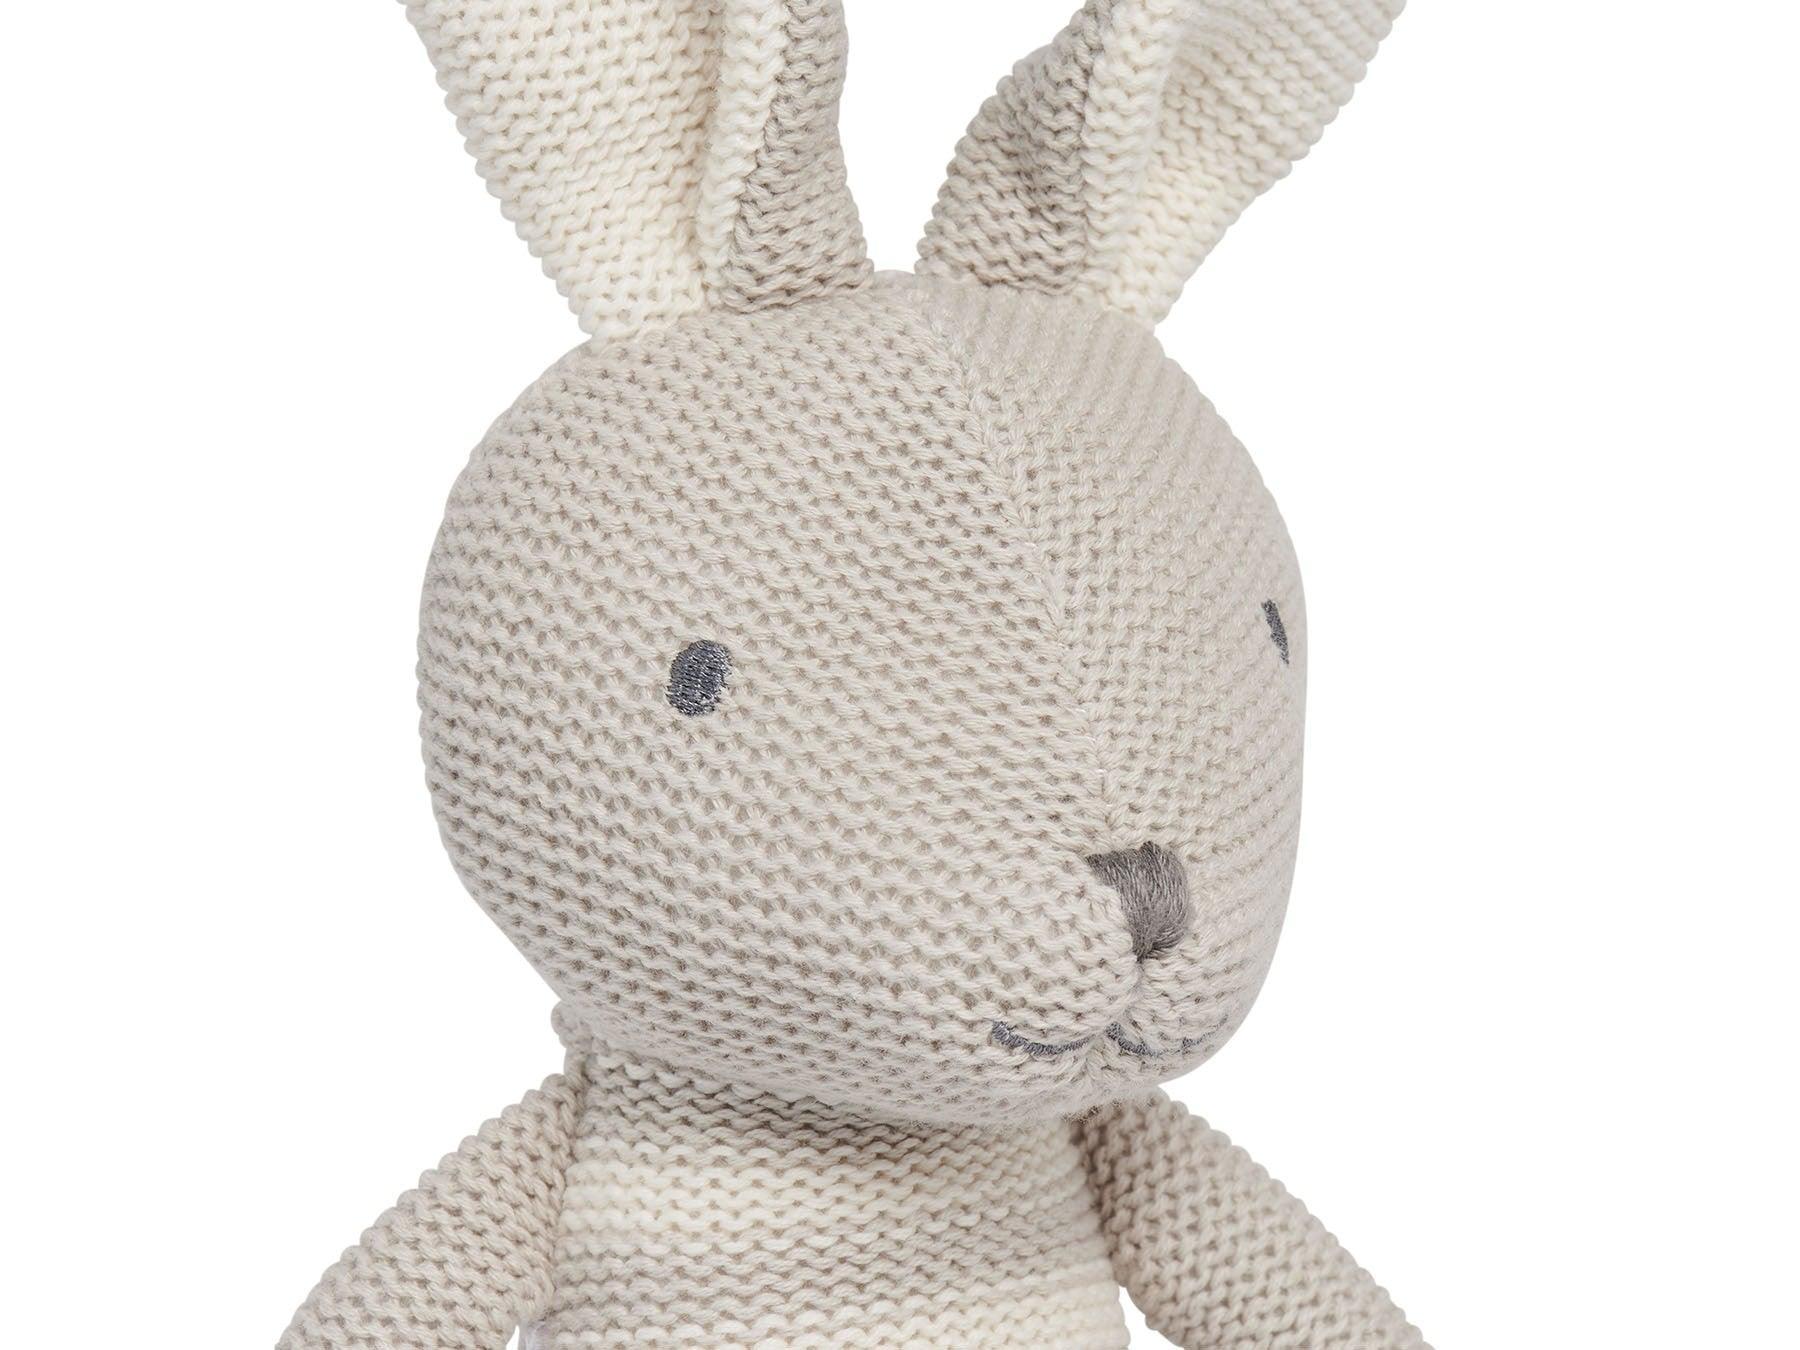 Jollein - Stuffed Animal Bunny Joey - Mari Kali Stores Cyprus